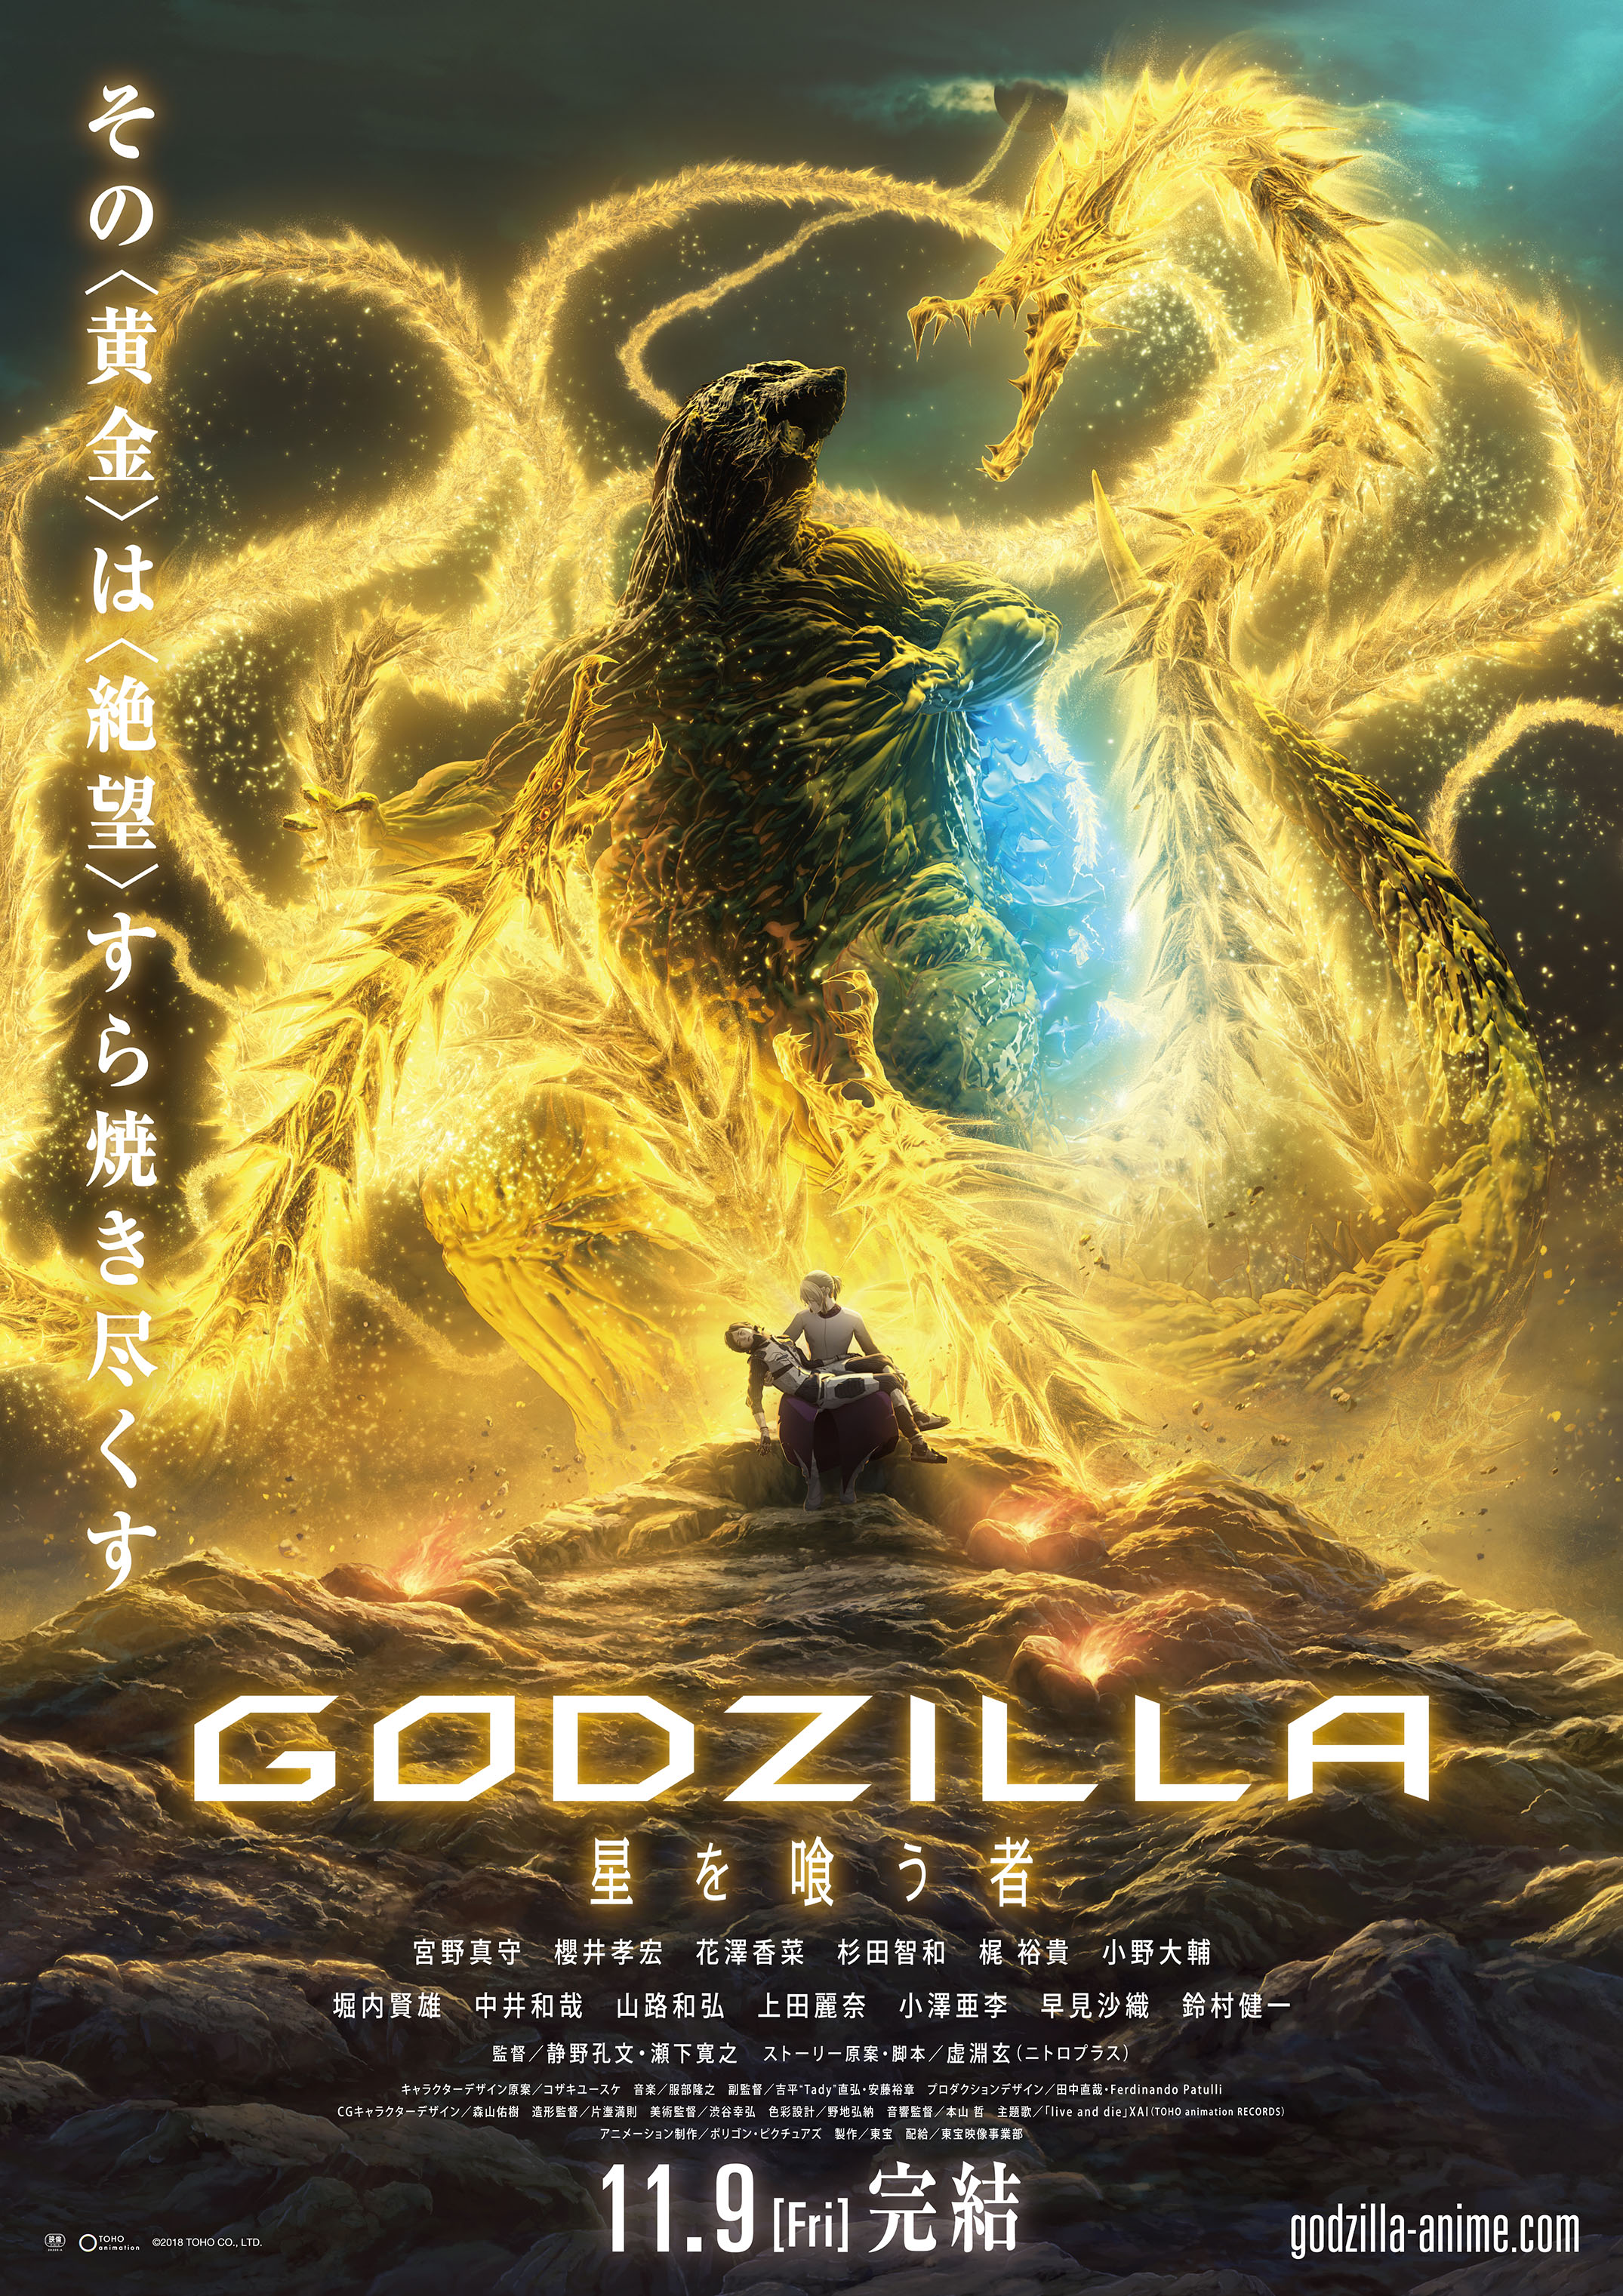 2017 Bandai Godzilla Earth 13 long Figure from The Planet Eater Anime Kaiju